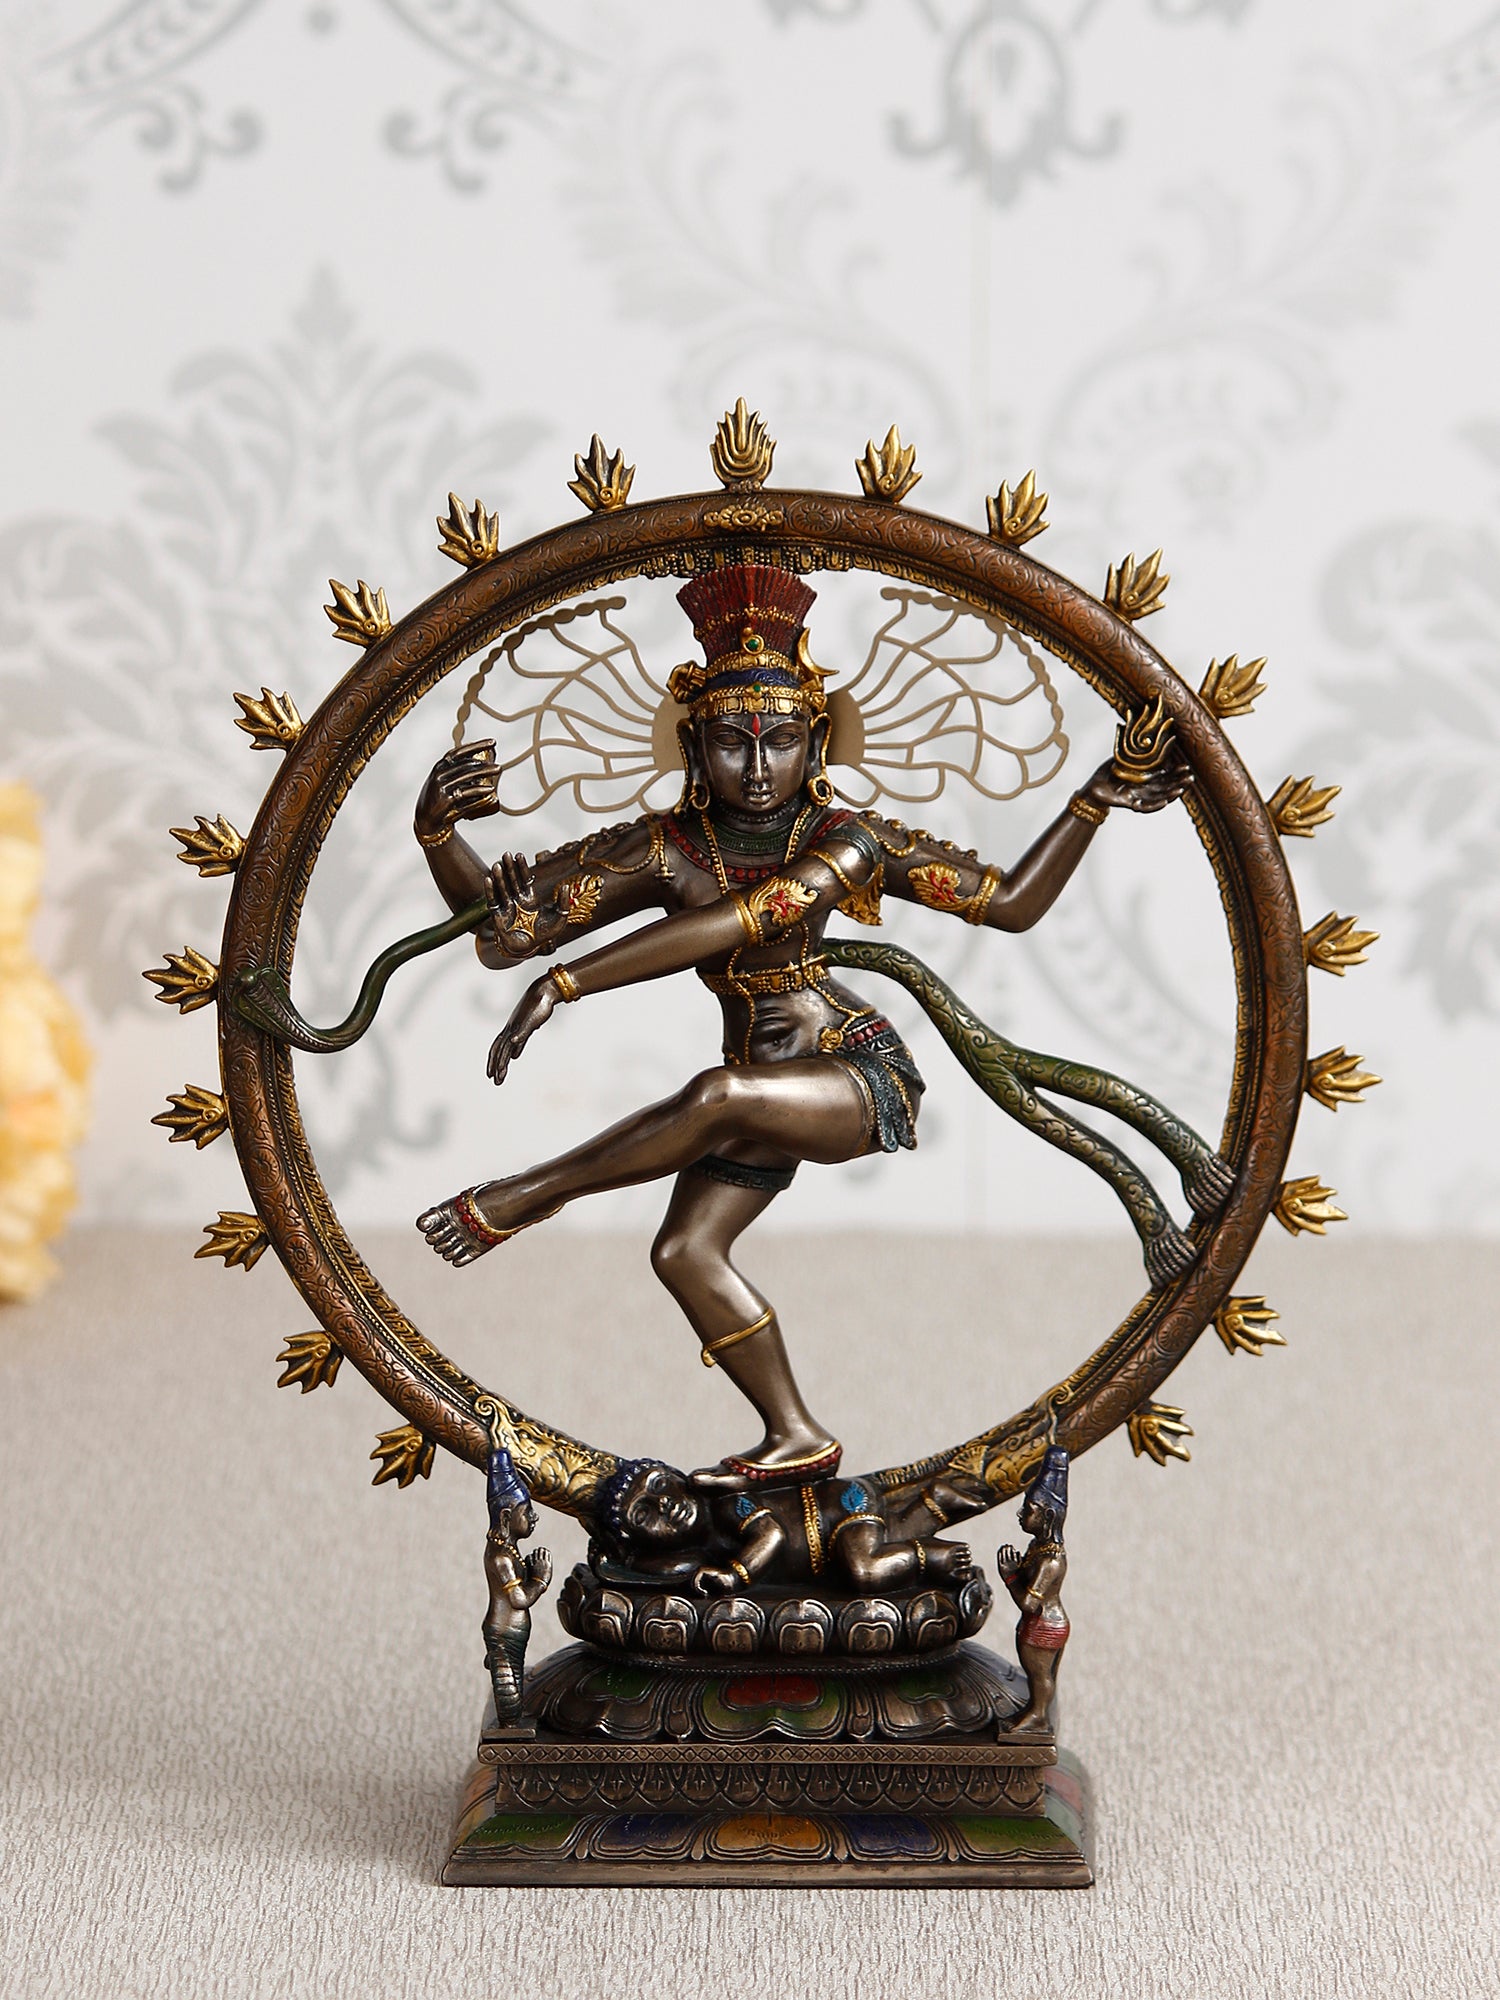 Polyresin and Bronze Decorative dancing nataraja statue